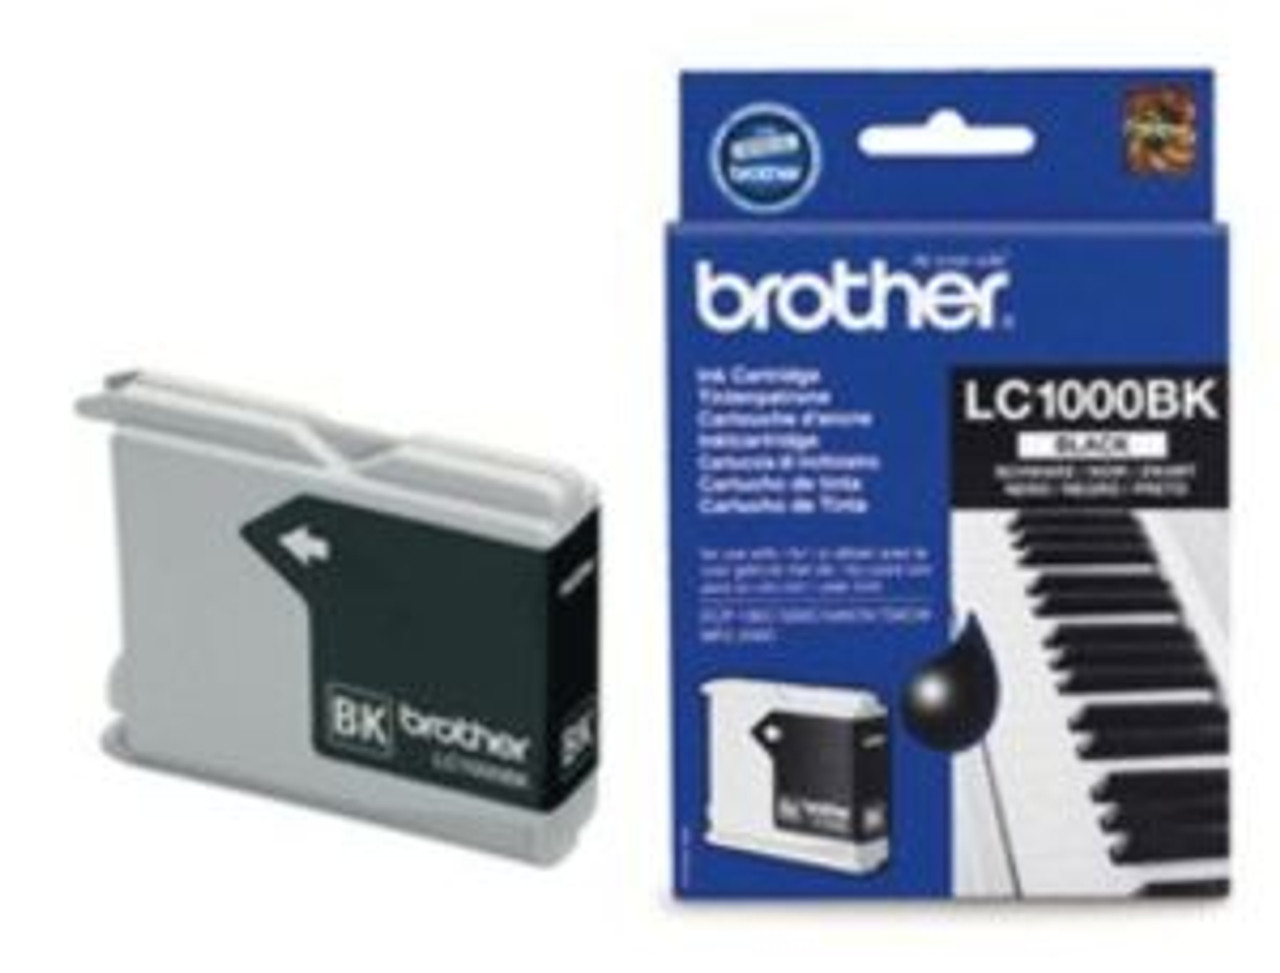 Brother Lc1000bk Original Black Ink Cartridge(Lc1000bk Inkjet Printer Cartridge)